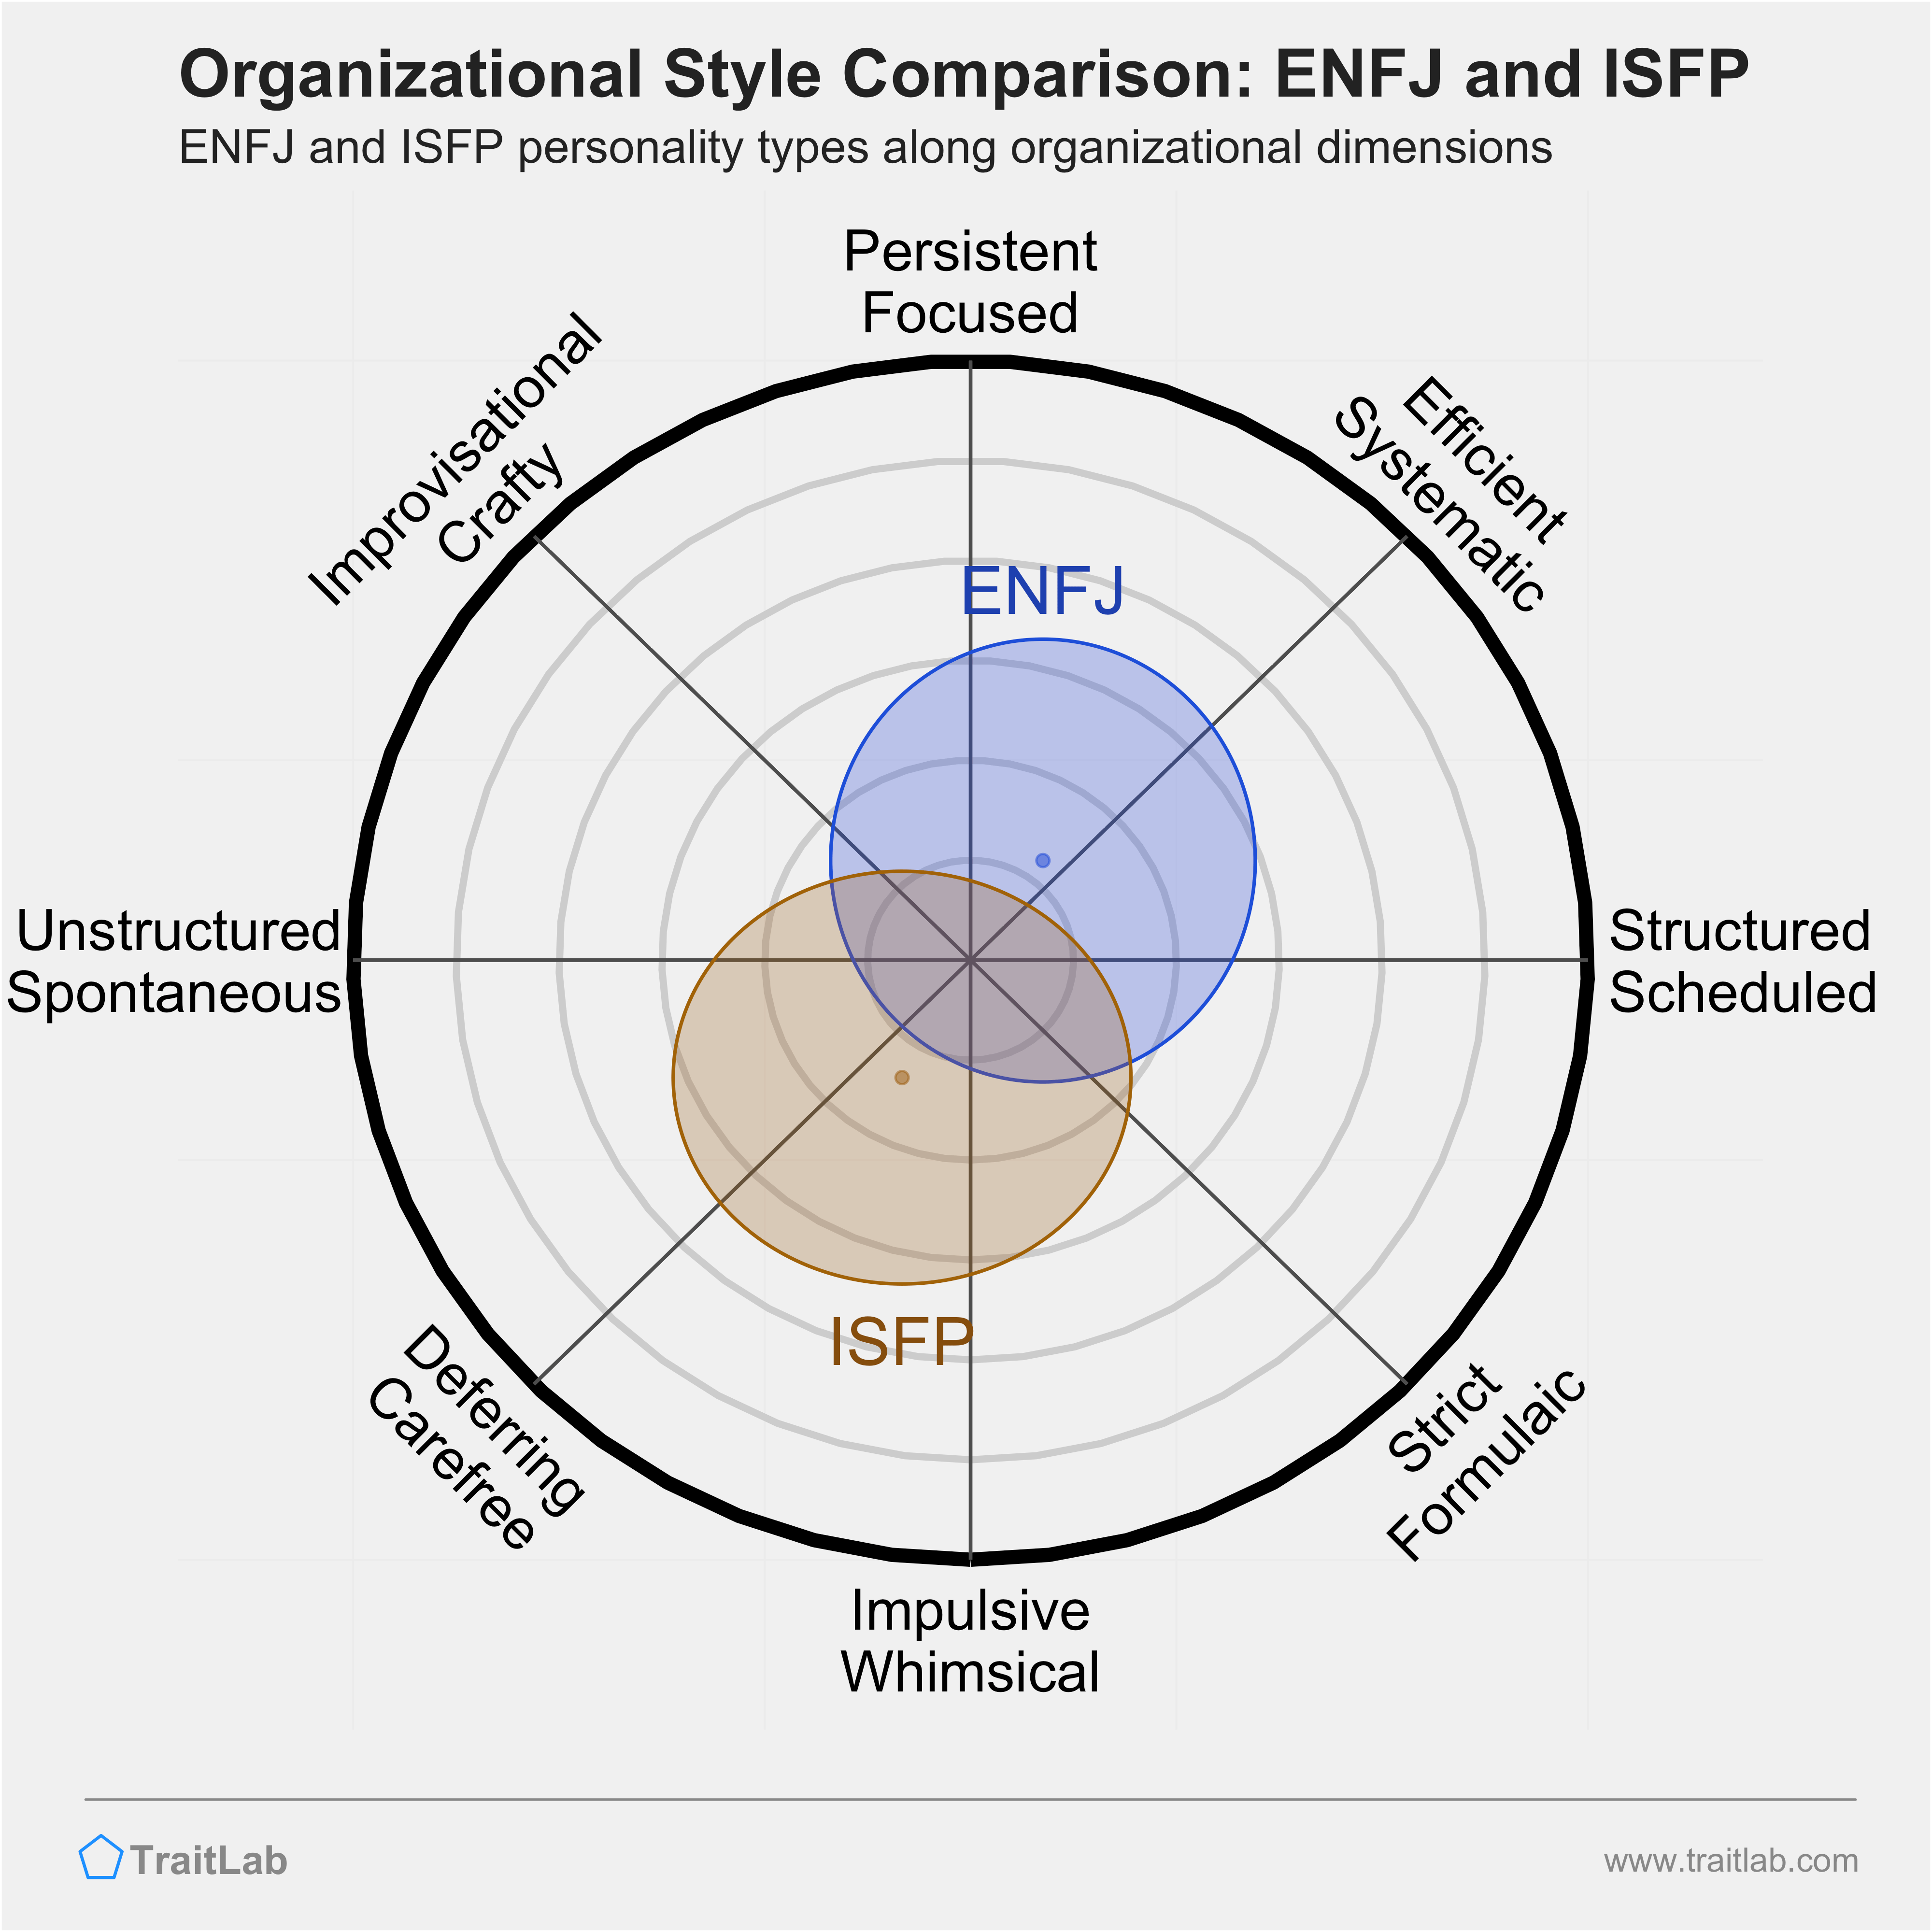 ENFJ and ISFP comparison across organizational dimensions